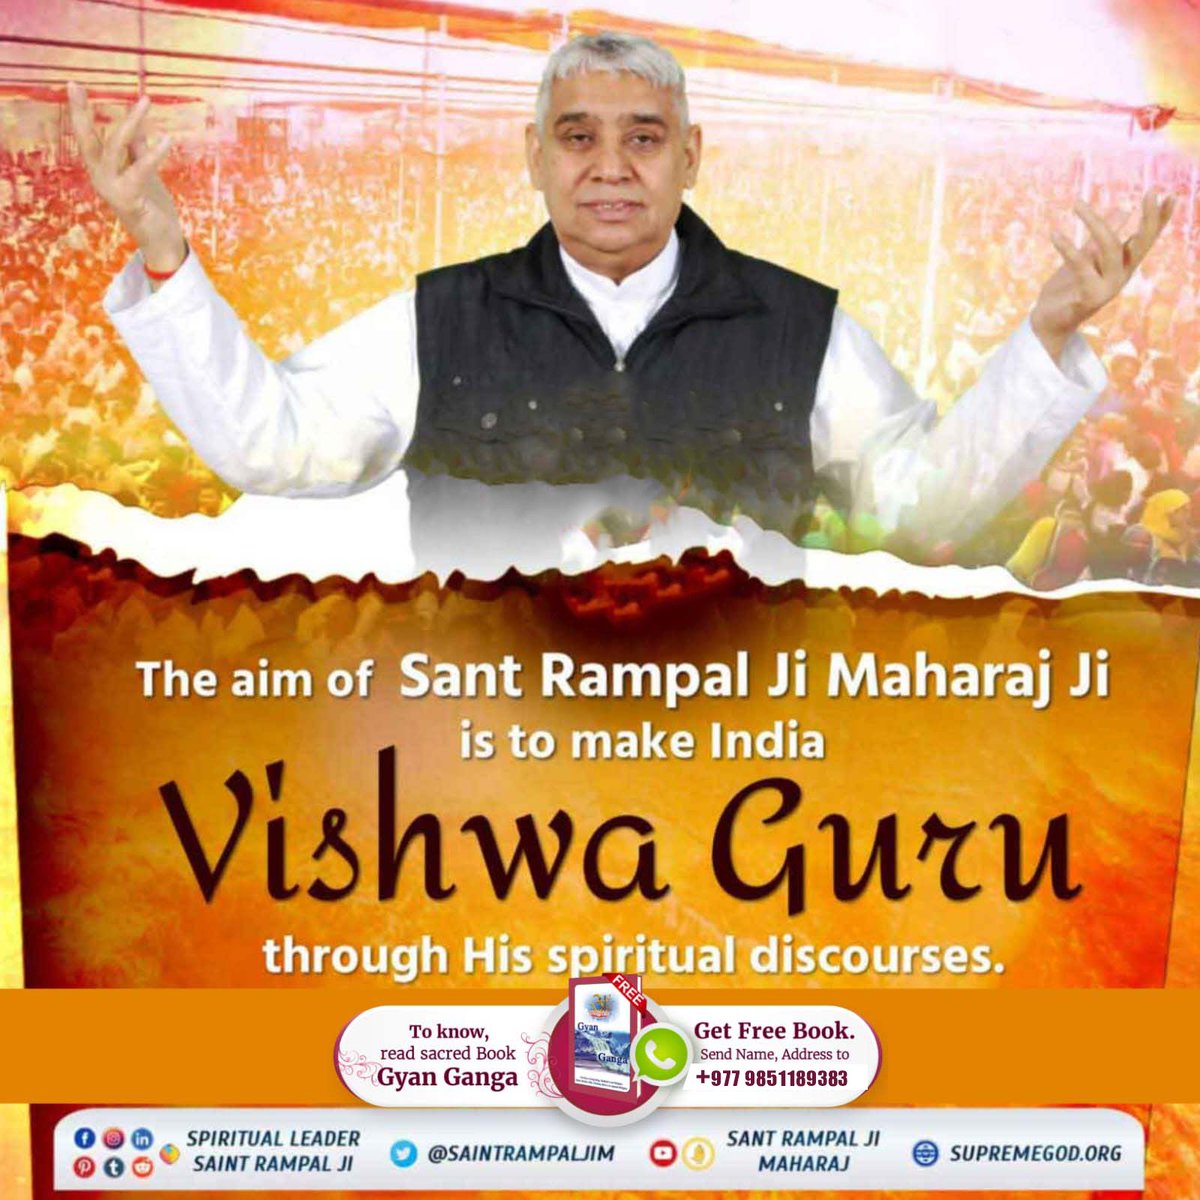 #AimOfSantRampalJi The aim of Sant Rampal Ji is to Make India Vishwa Guru through His Spiritual discourses